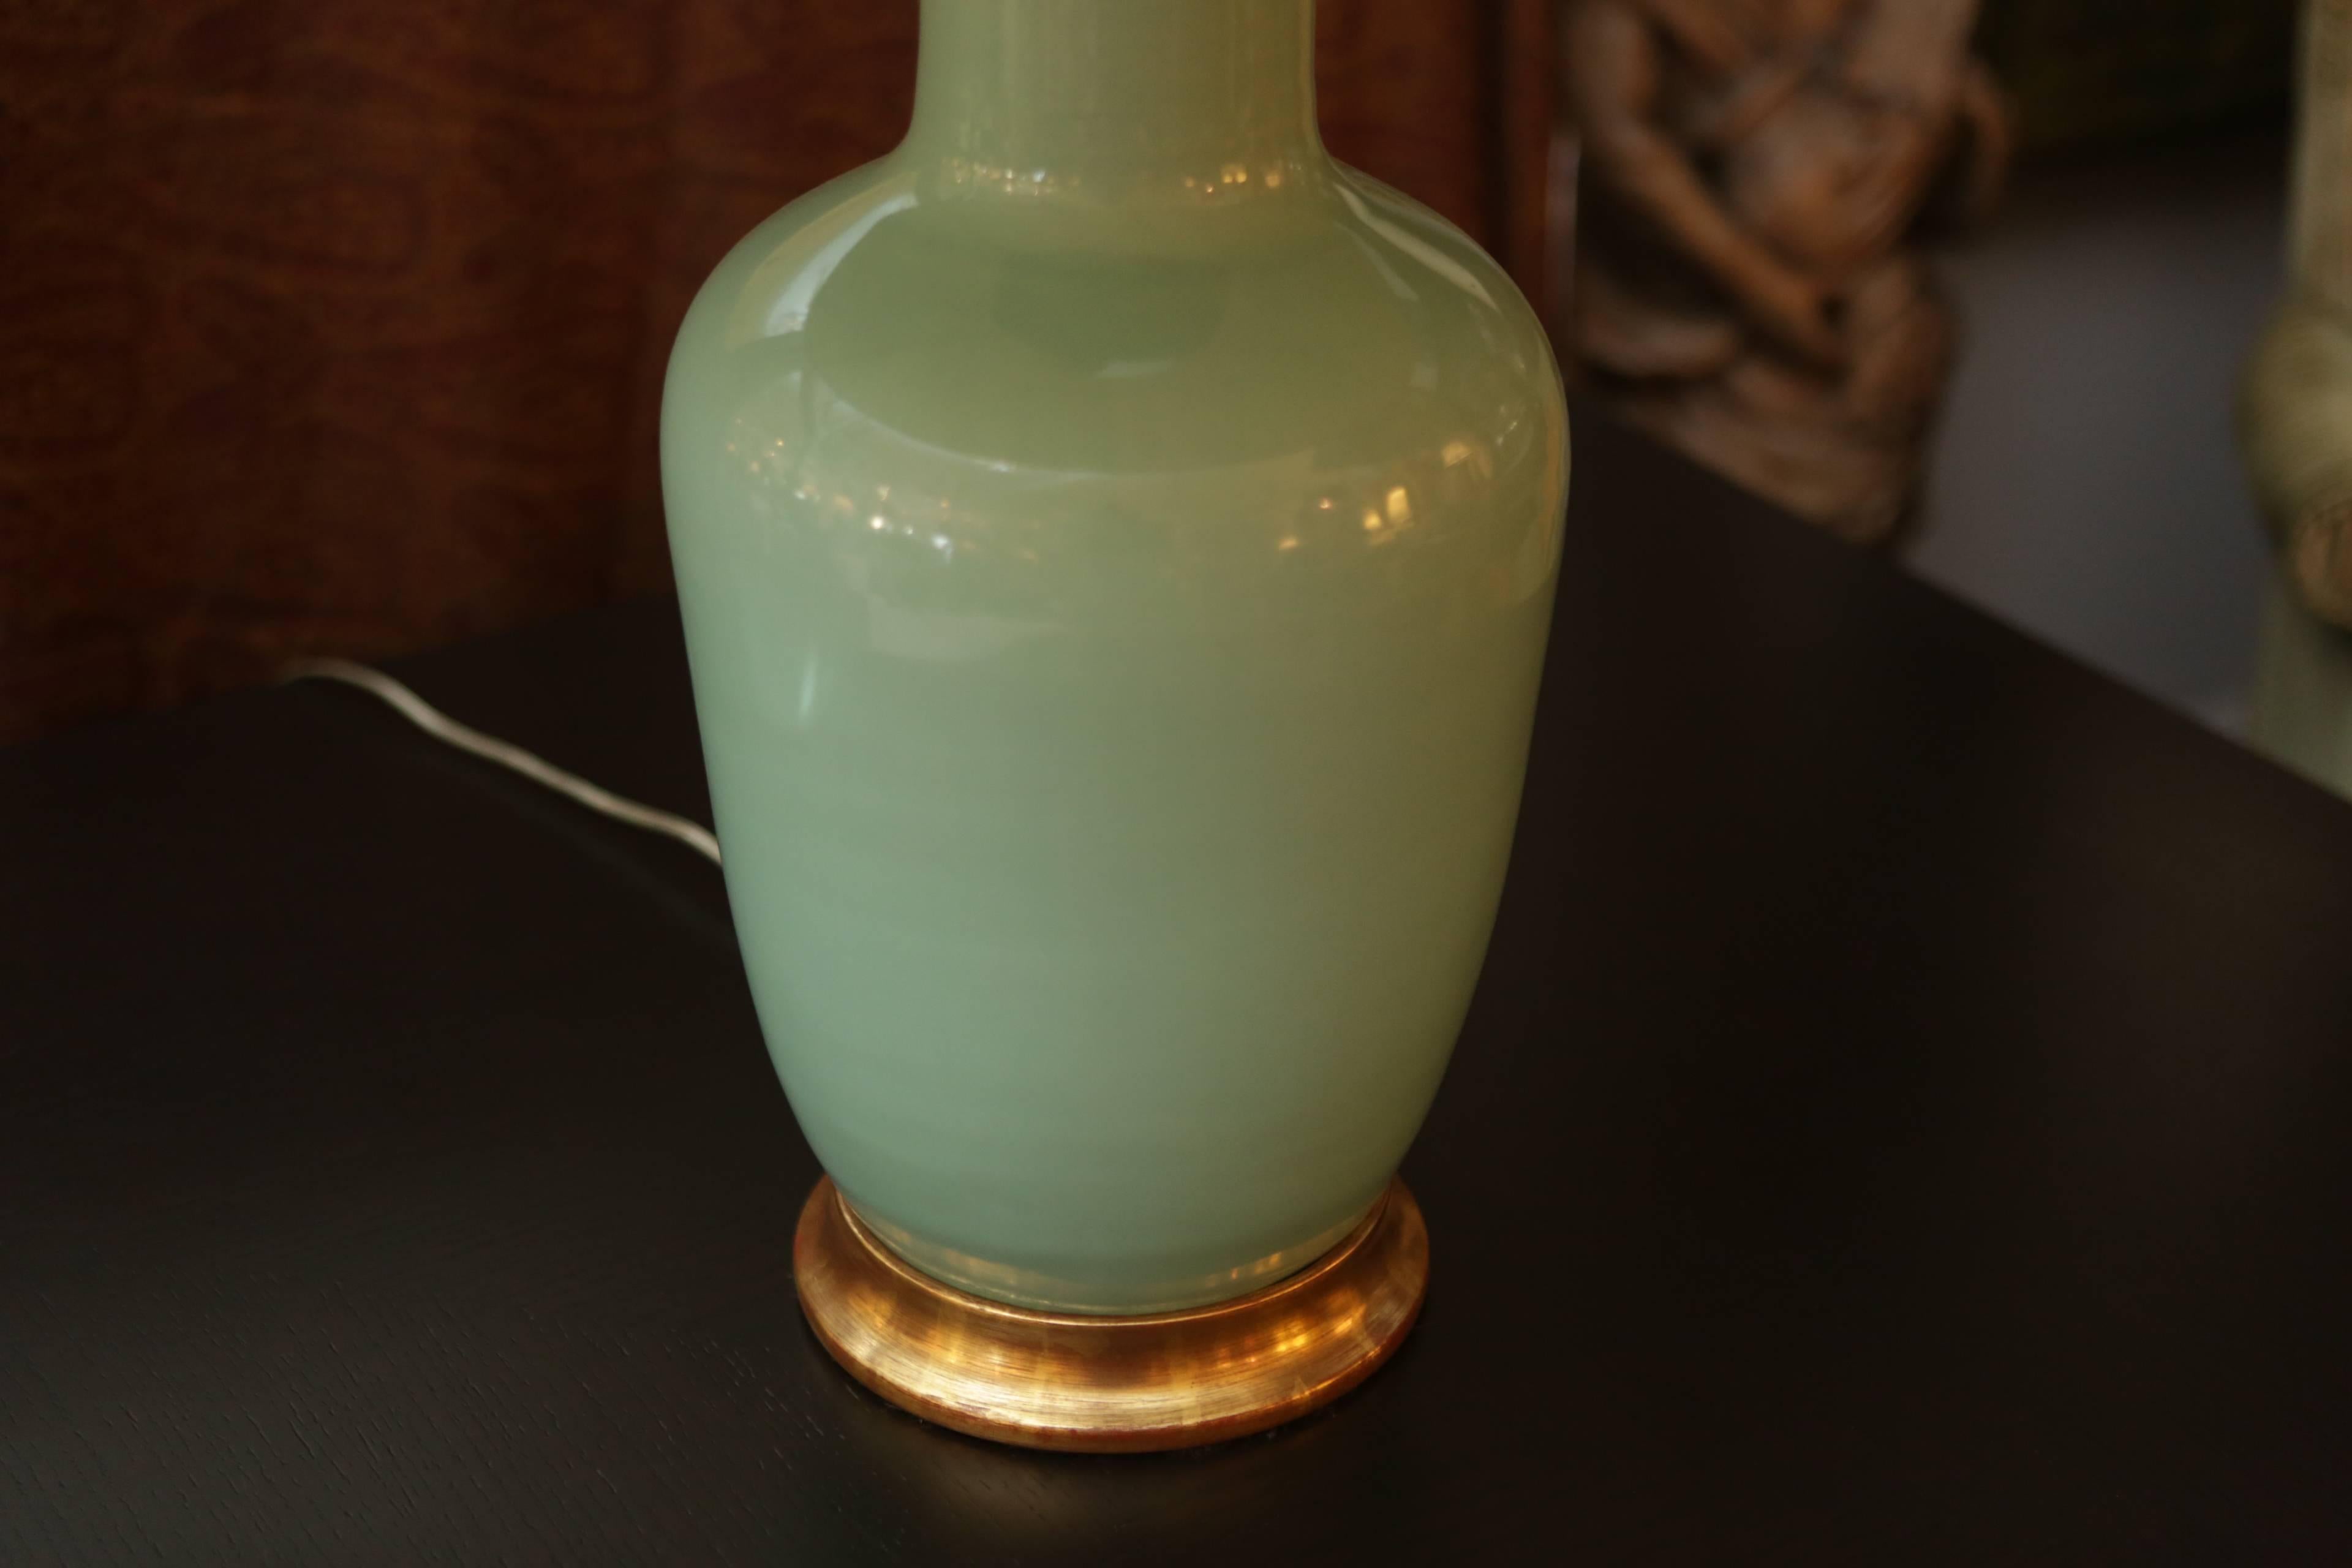 A beautiful Christopher Spitzmiller celadon colored ceramic ginger jar style lamp. The base is finished in 24-karat gold leaf.

Measurements: 30